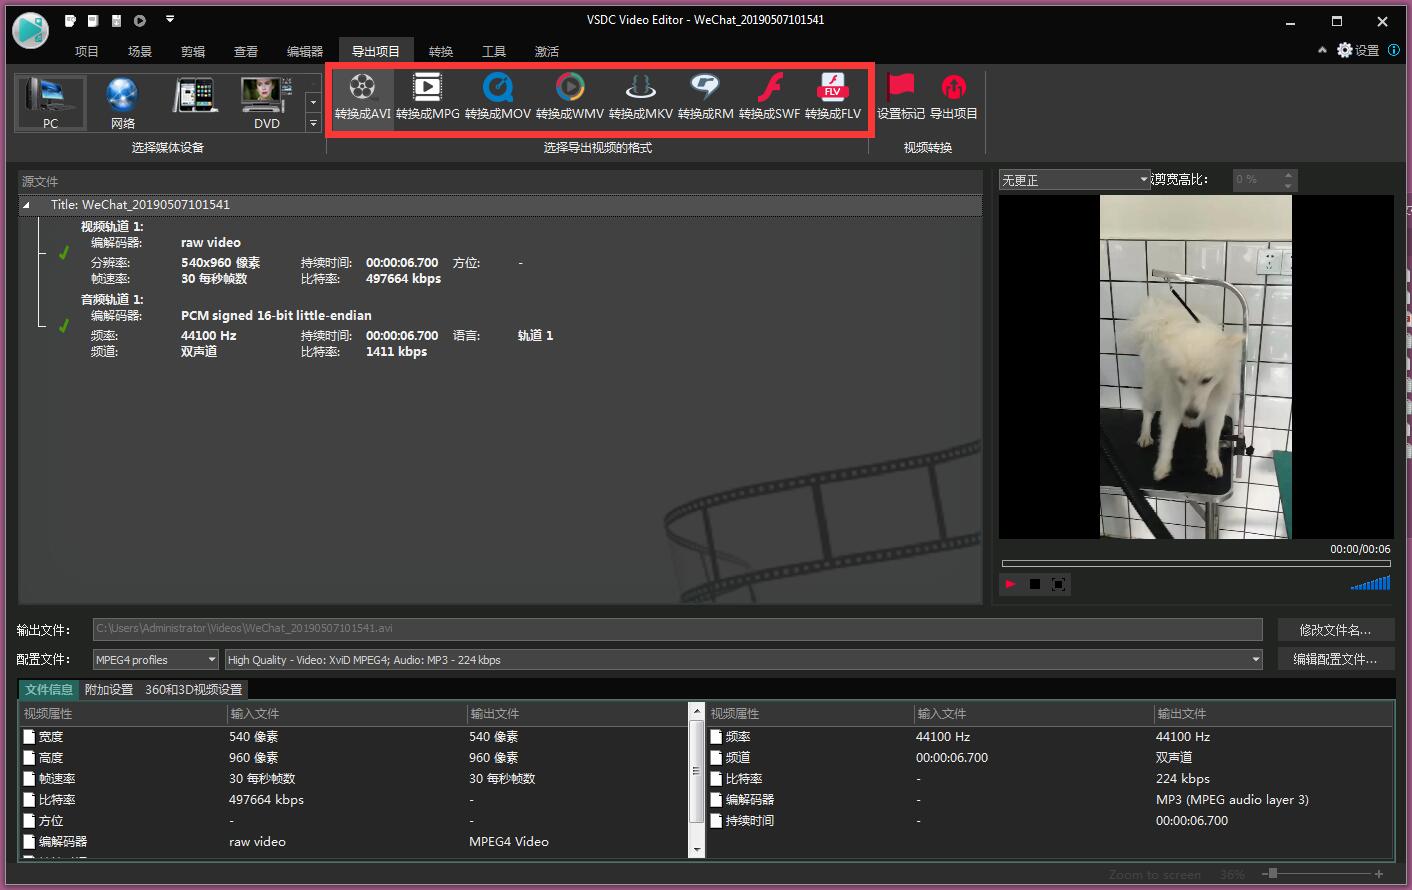 VSDC Video Editor Pro 8.2.3.477 free instals